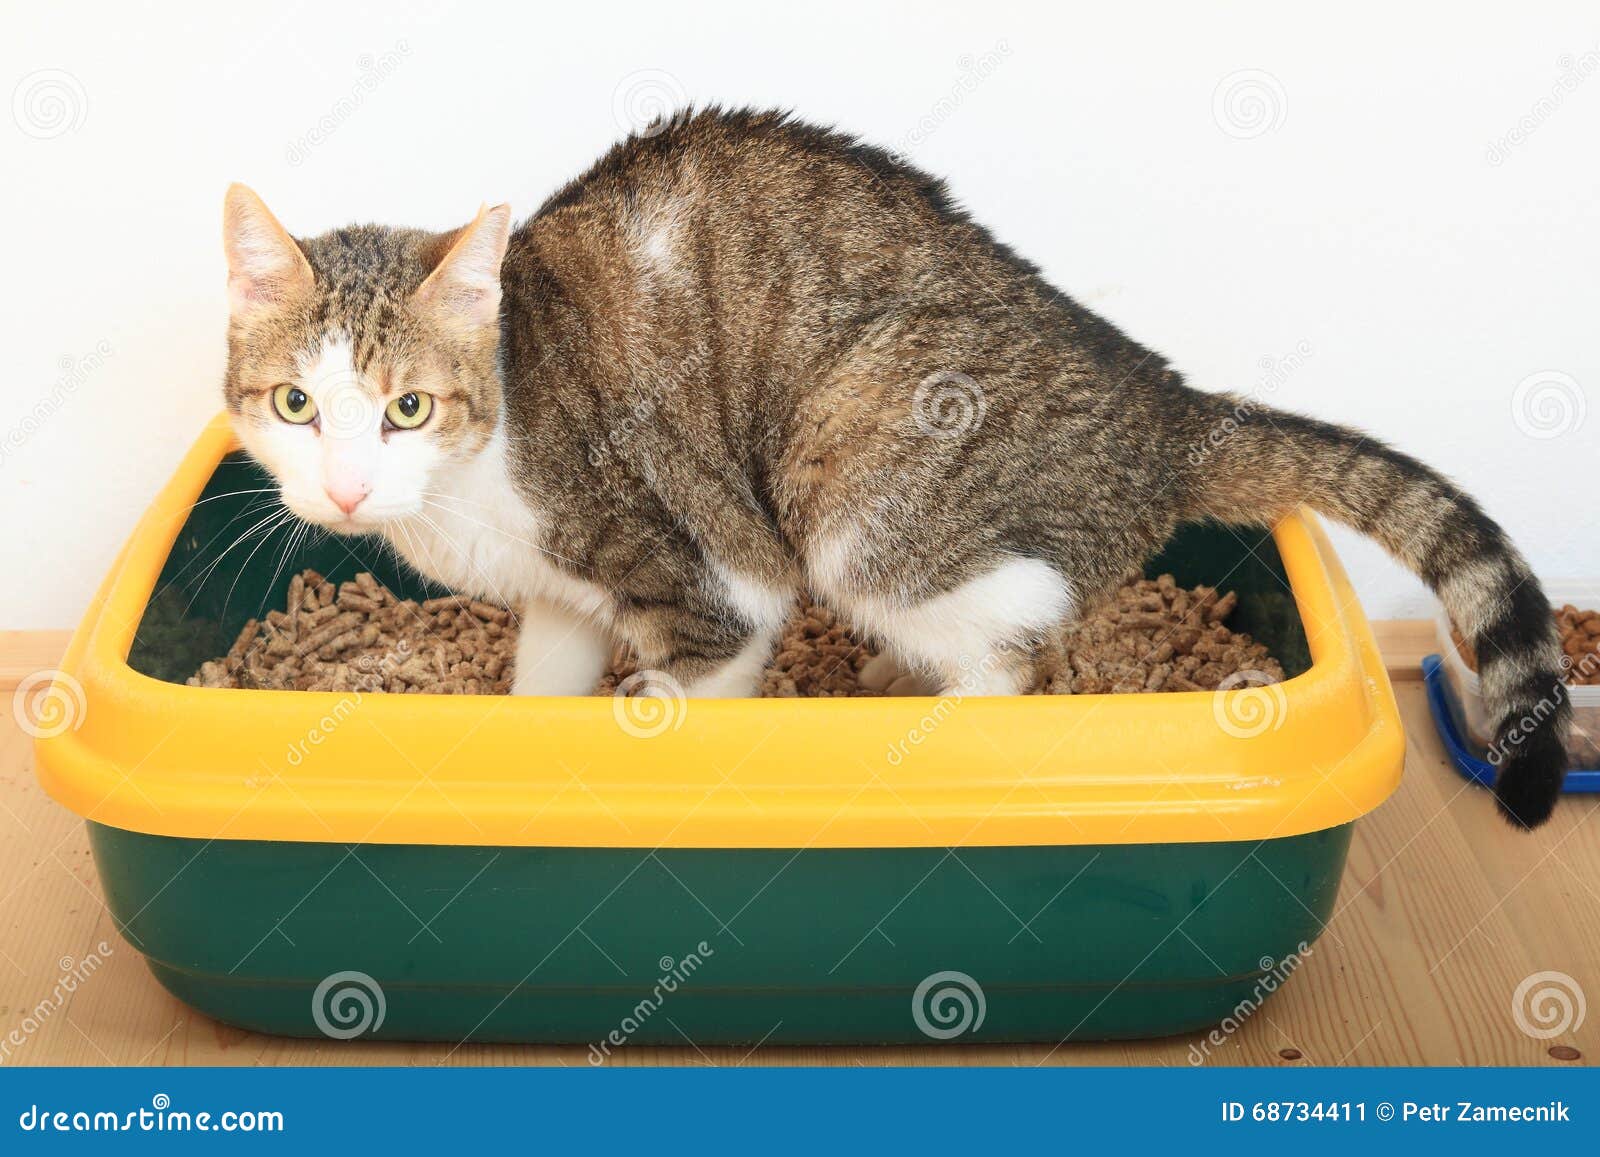 tabby cat on litter box